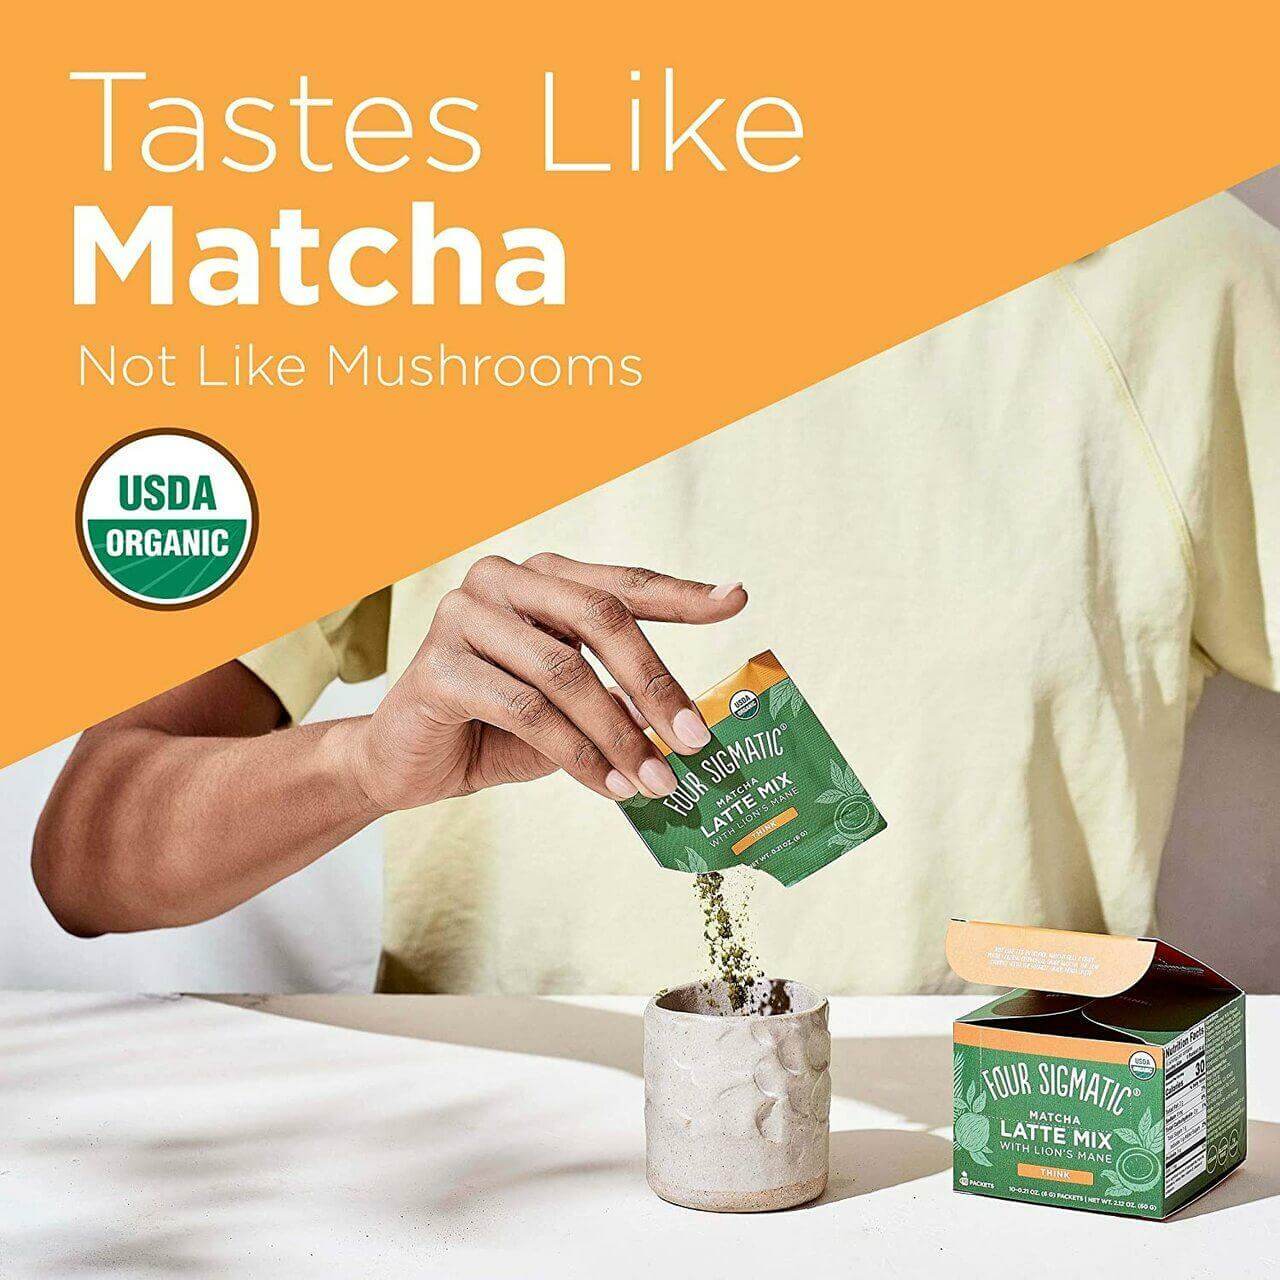 Four Sigmatic Matcha Latte Mix with Lion's Mane Eng 10 X 6 g sachets 60 Gram - Nutrition Plus